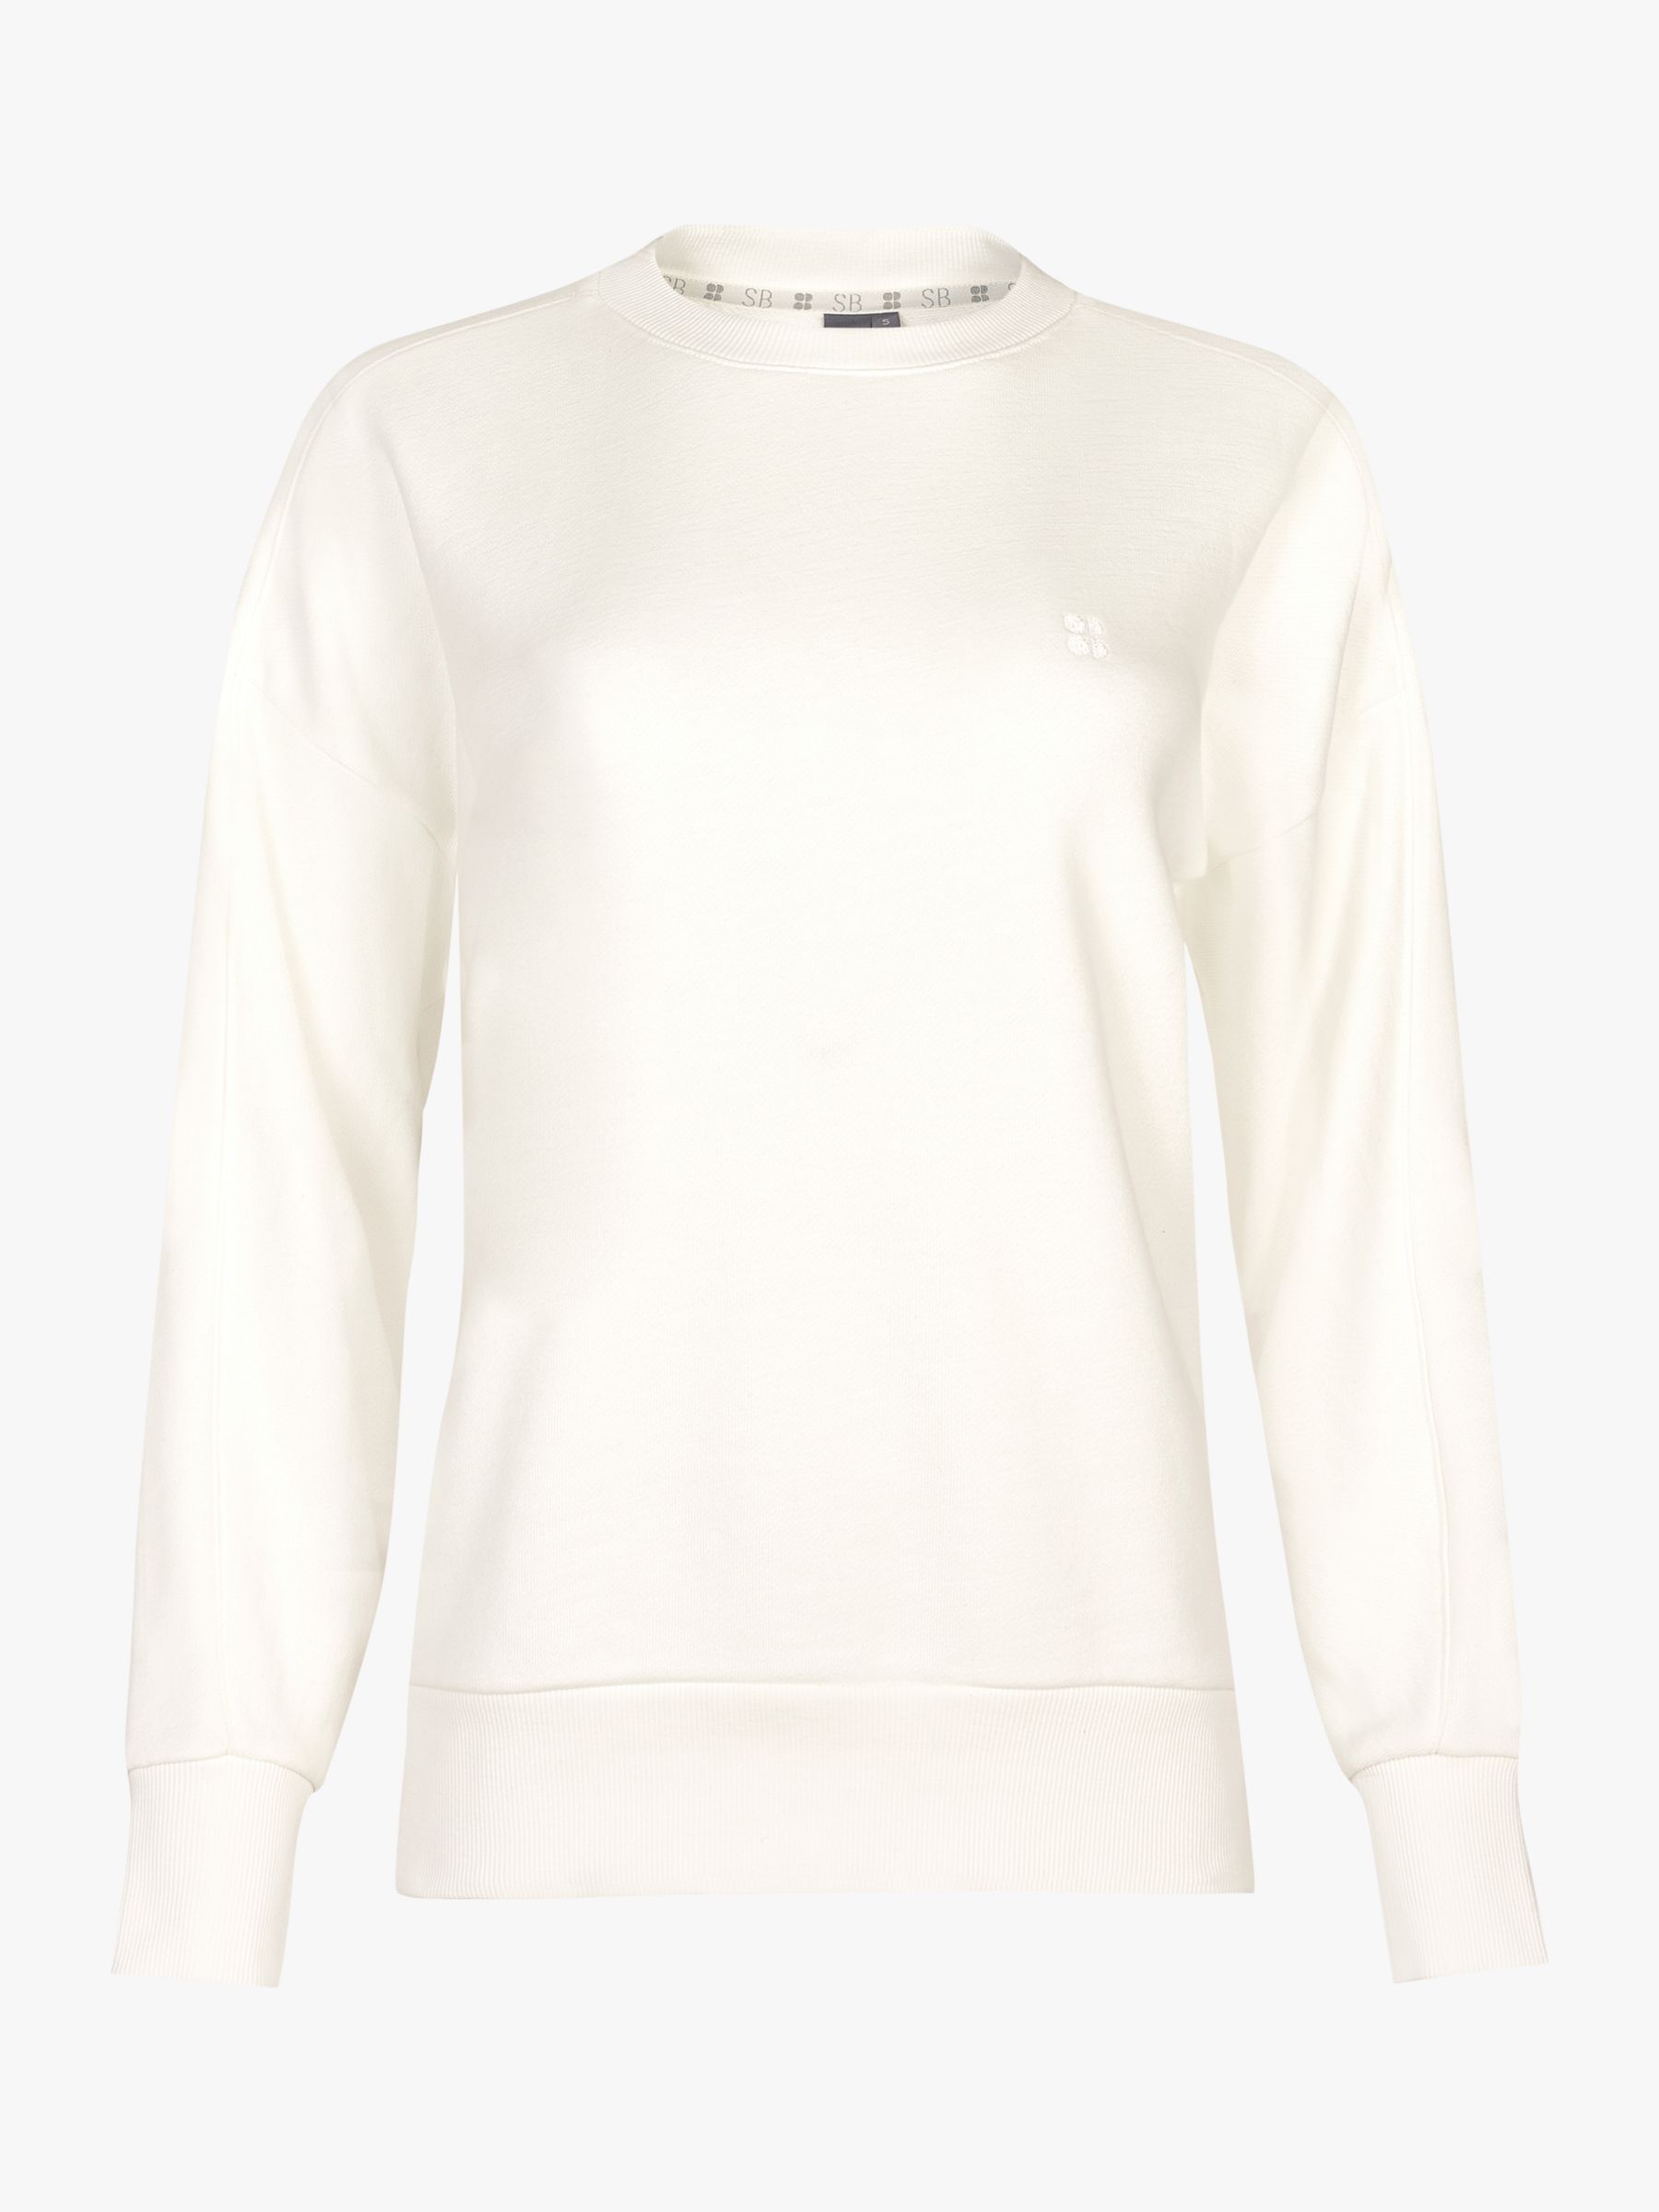 Sweaty Betty Essentials Sweatshirt, Lily White at John Lewis & Partners